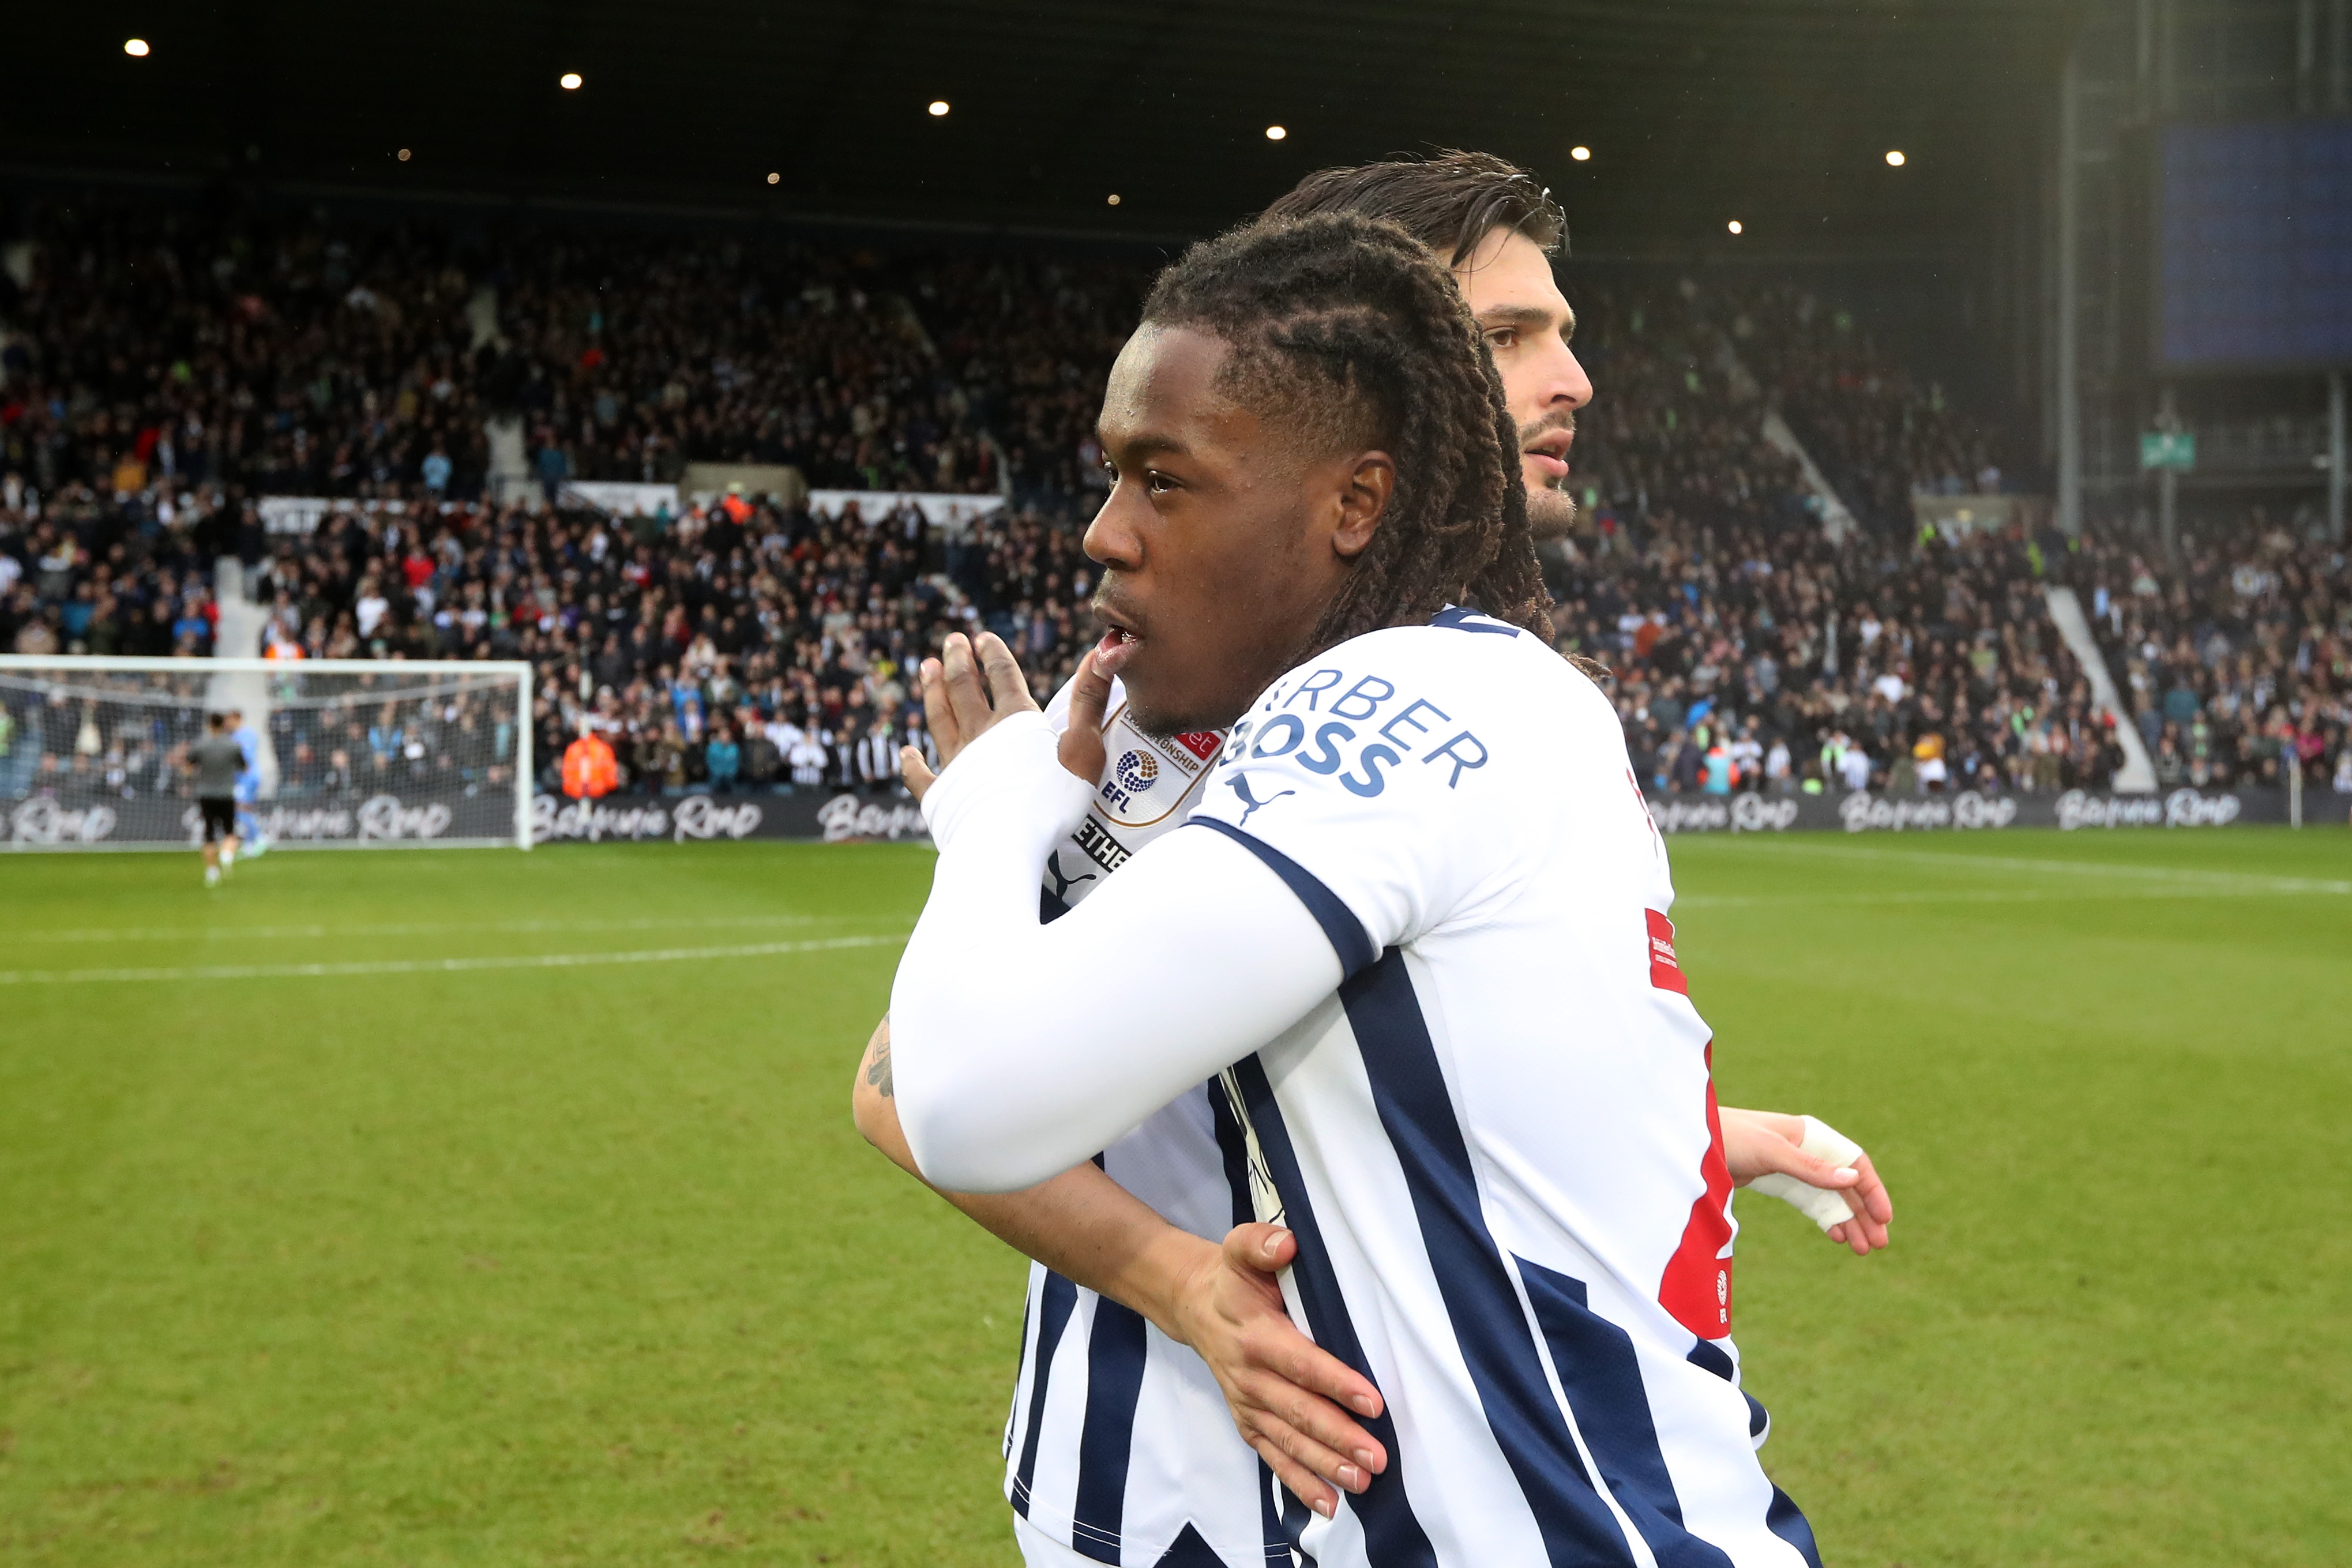 Brandon Thomas-Asante and Okay Yokuslu embrace before the game against Birmingham City